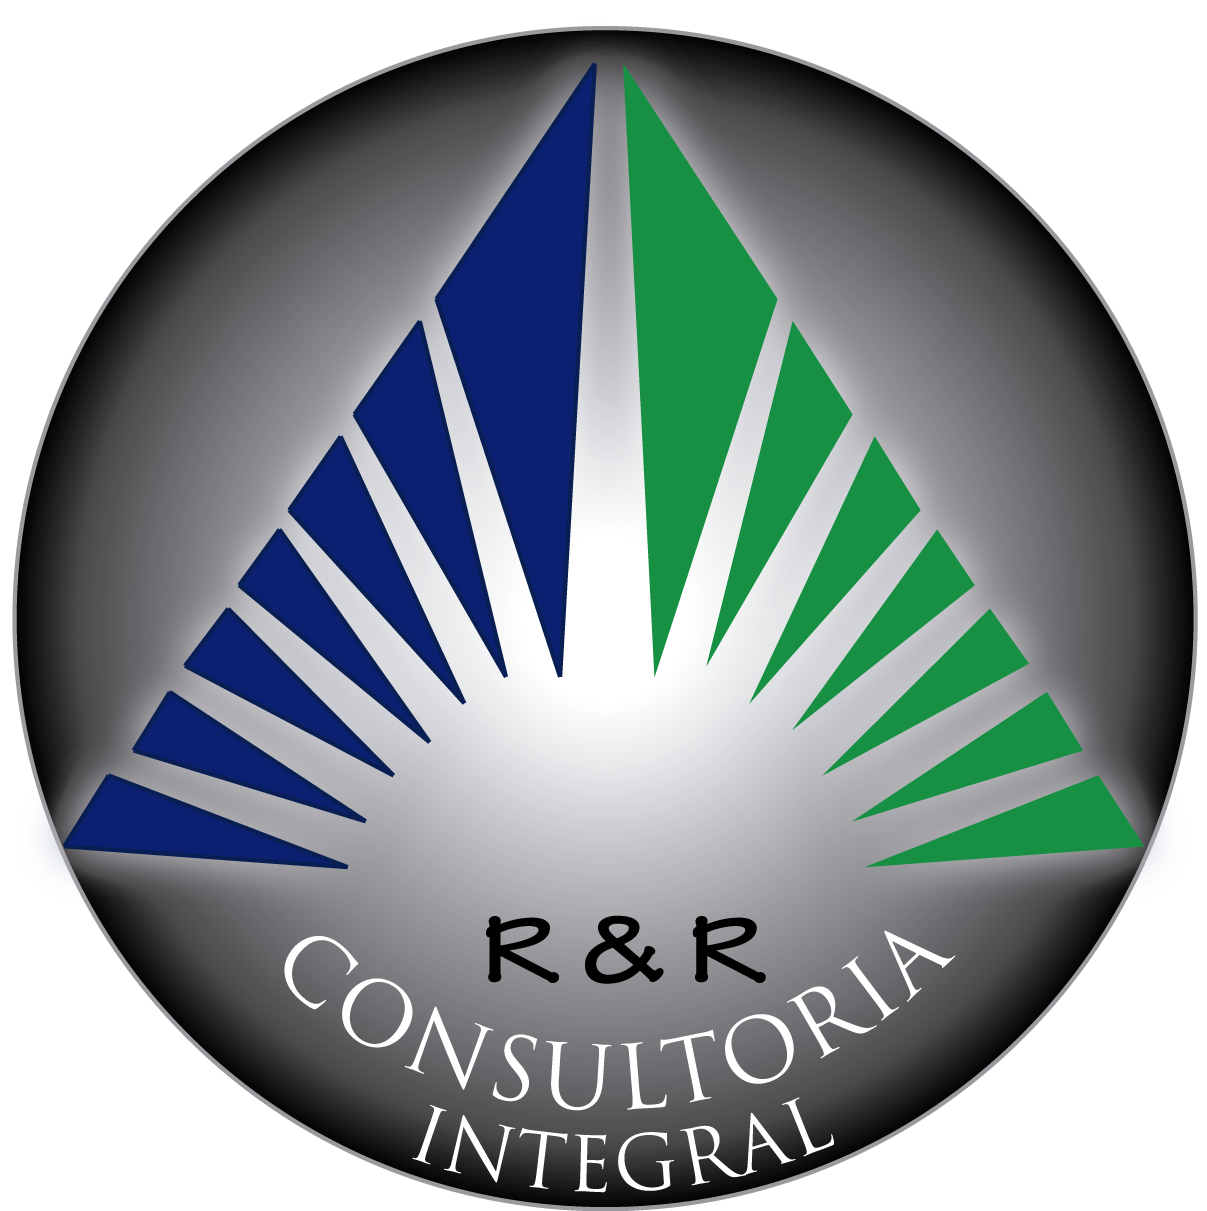 R&RConsultoriaIntegral logo